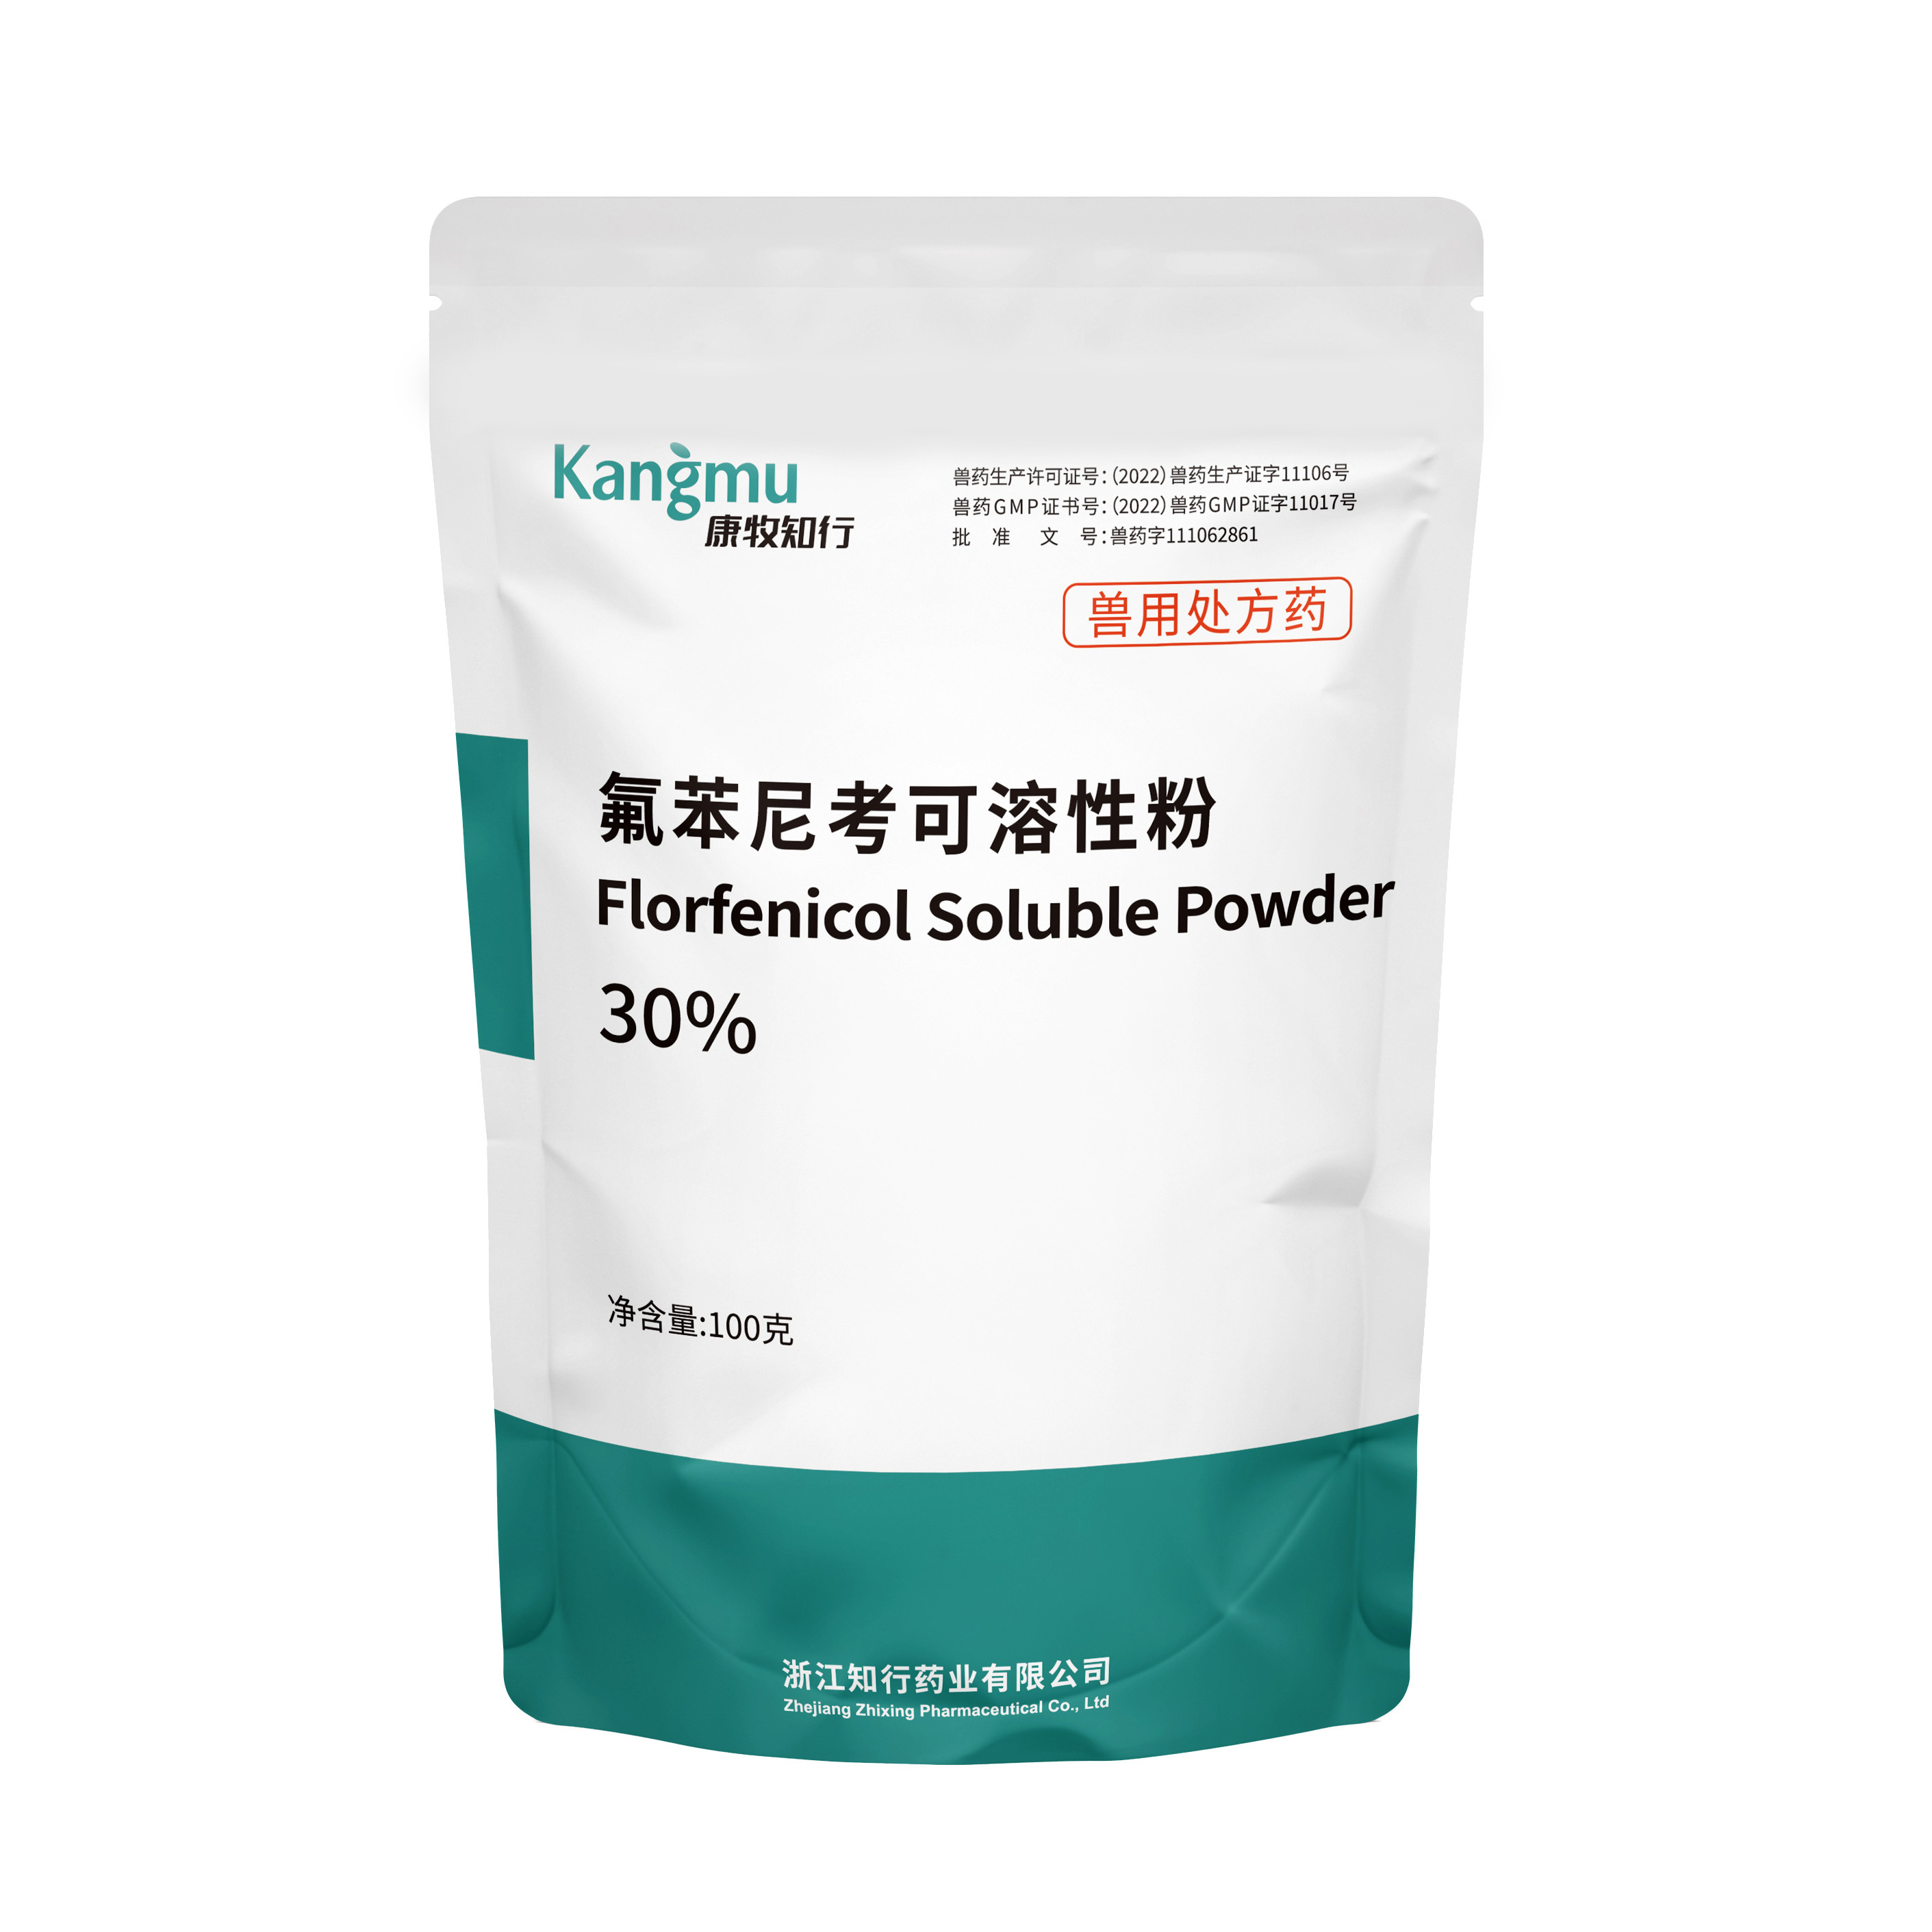 30% florfenicol soluble powder